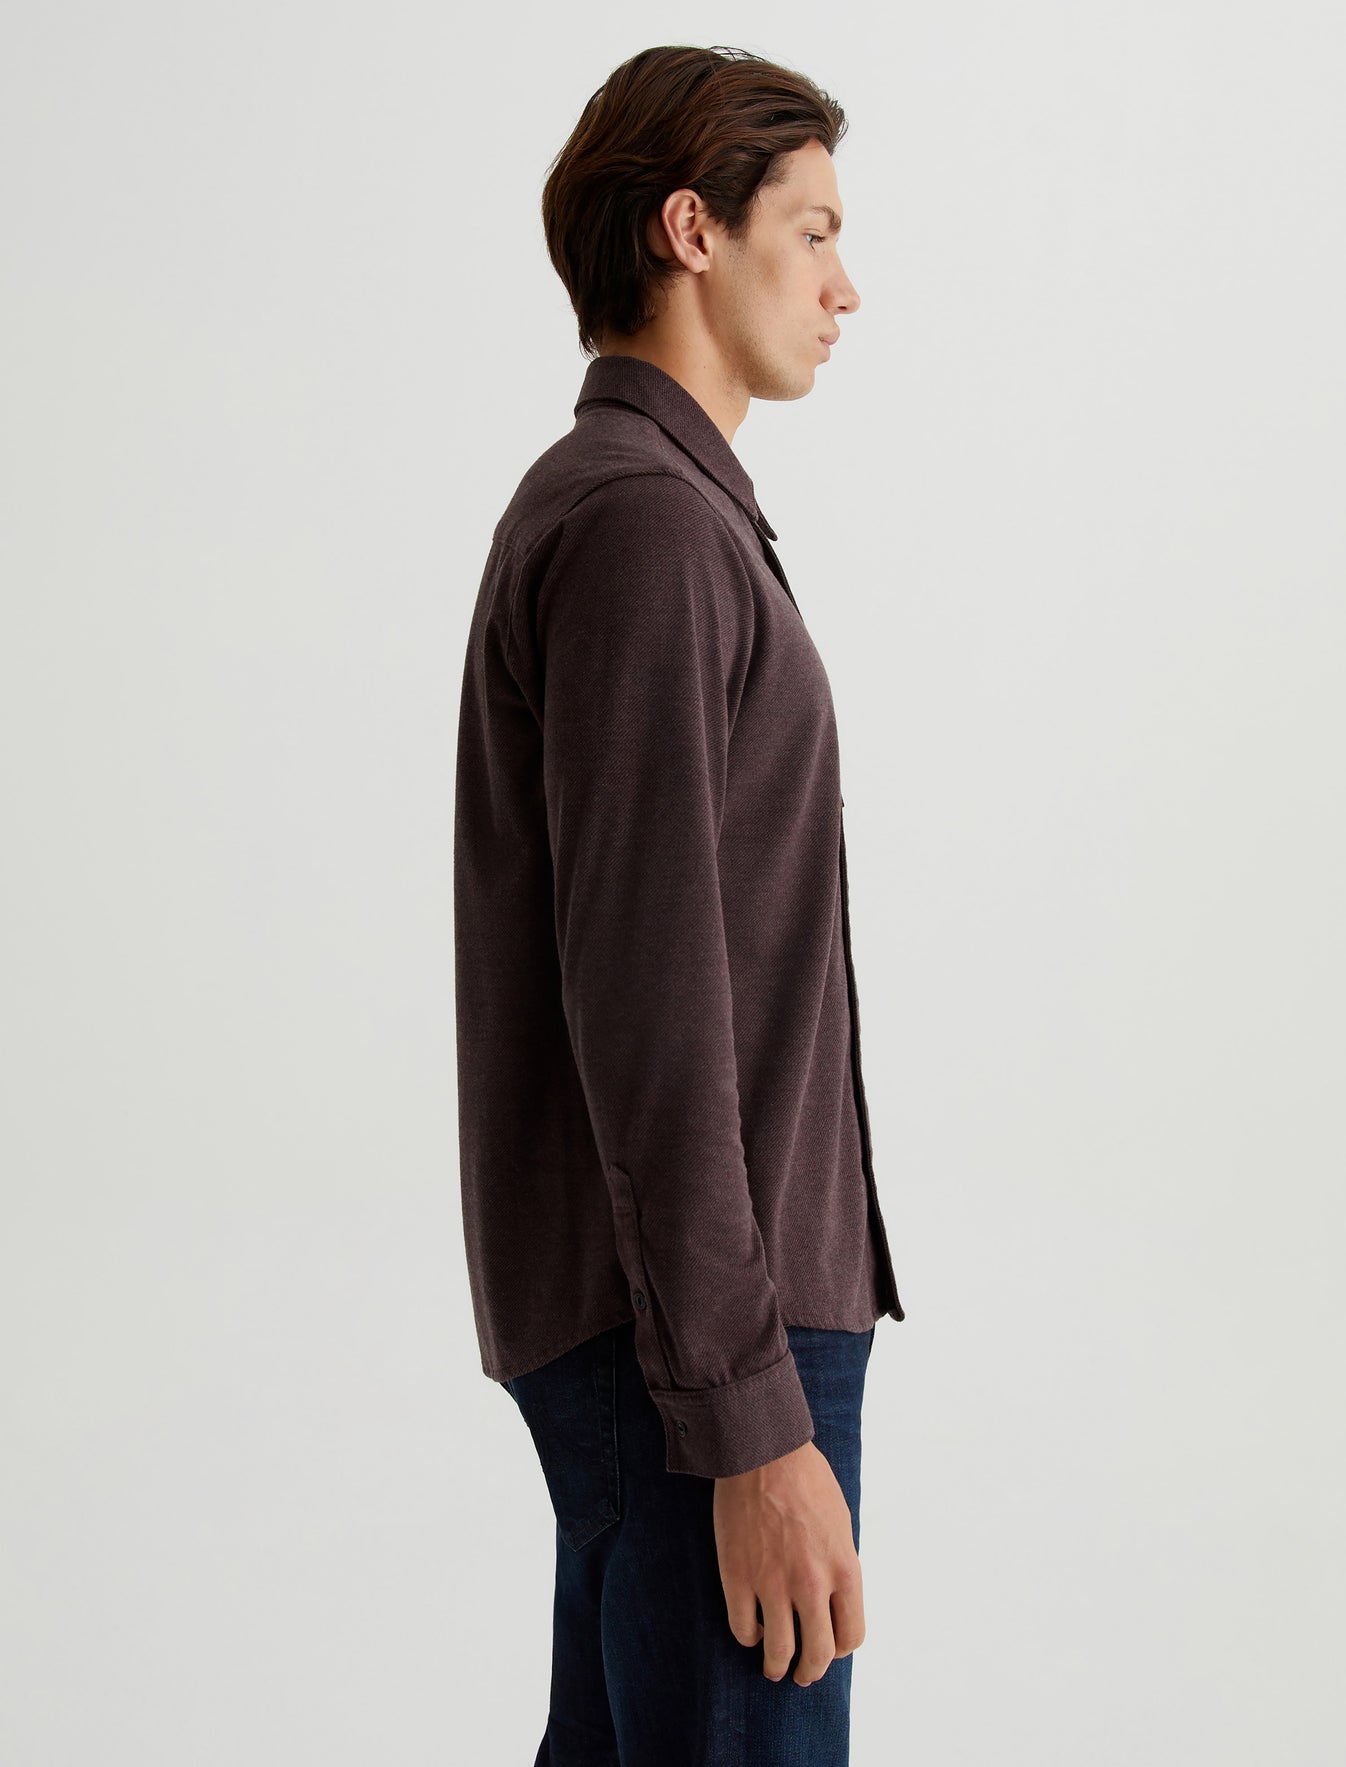 Mason Shirt Heather Charcoal/Dark Plum Classic Fit Long Sleeve Button Up Shirt Mens Top Photo 5